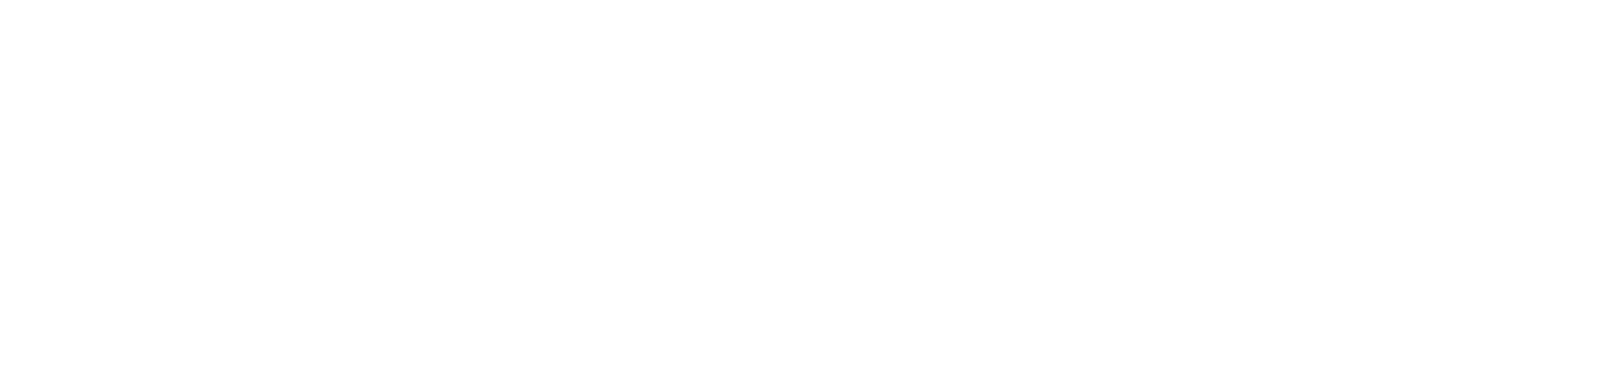 Media and Games Invest logo large for dark backgrounds (transparent PNG)